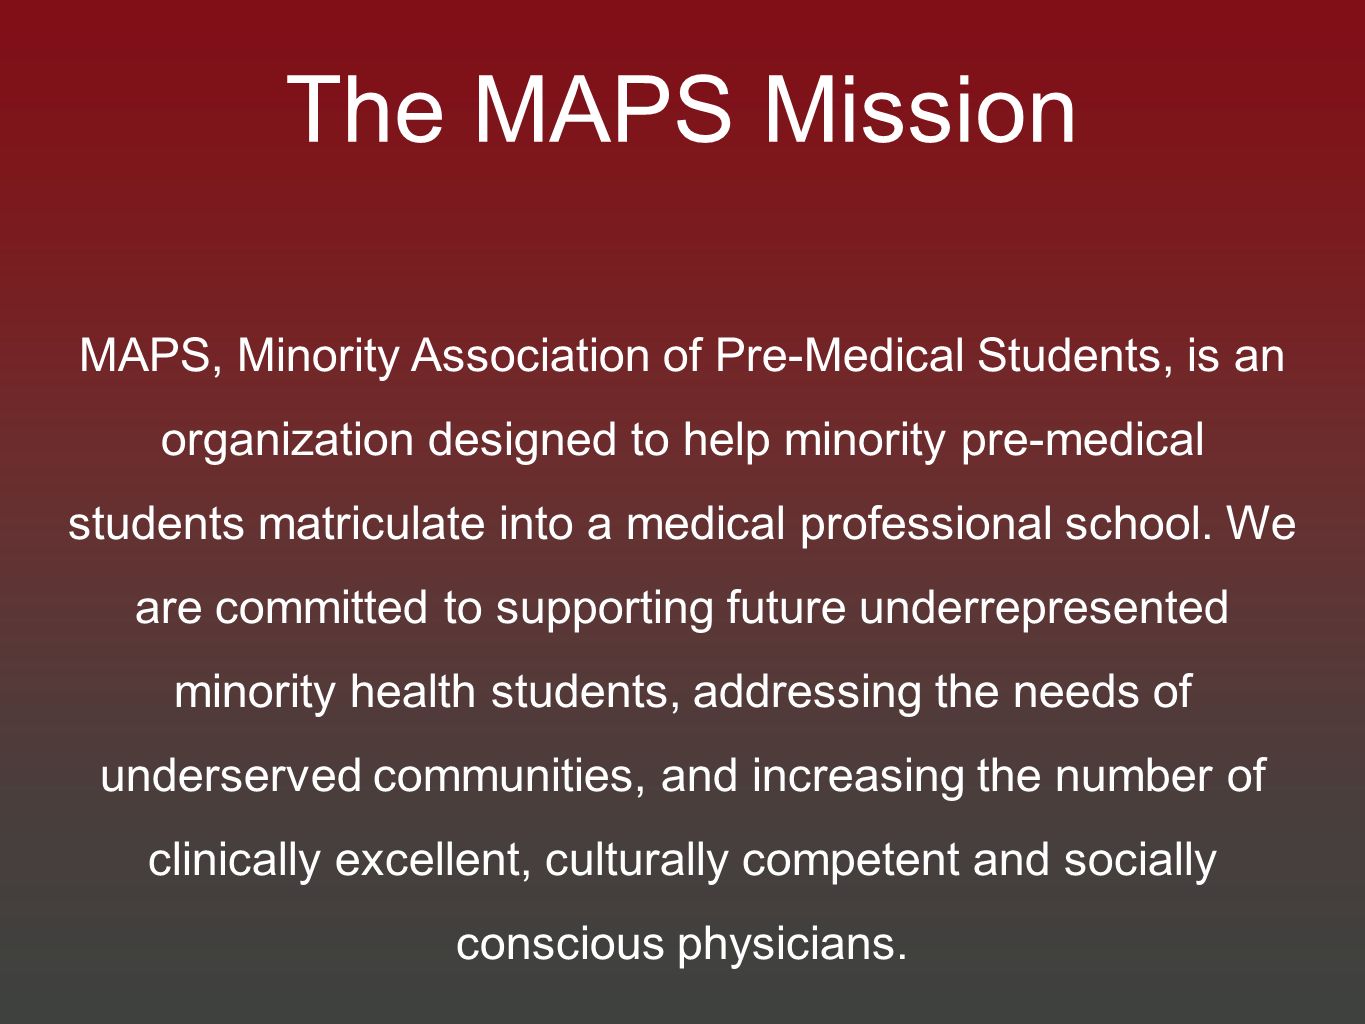 MAPS, Minority Association of Pre-Medical Students, is an organization designed to help minority pre-medical students matriculate into a medical professional school.